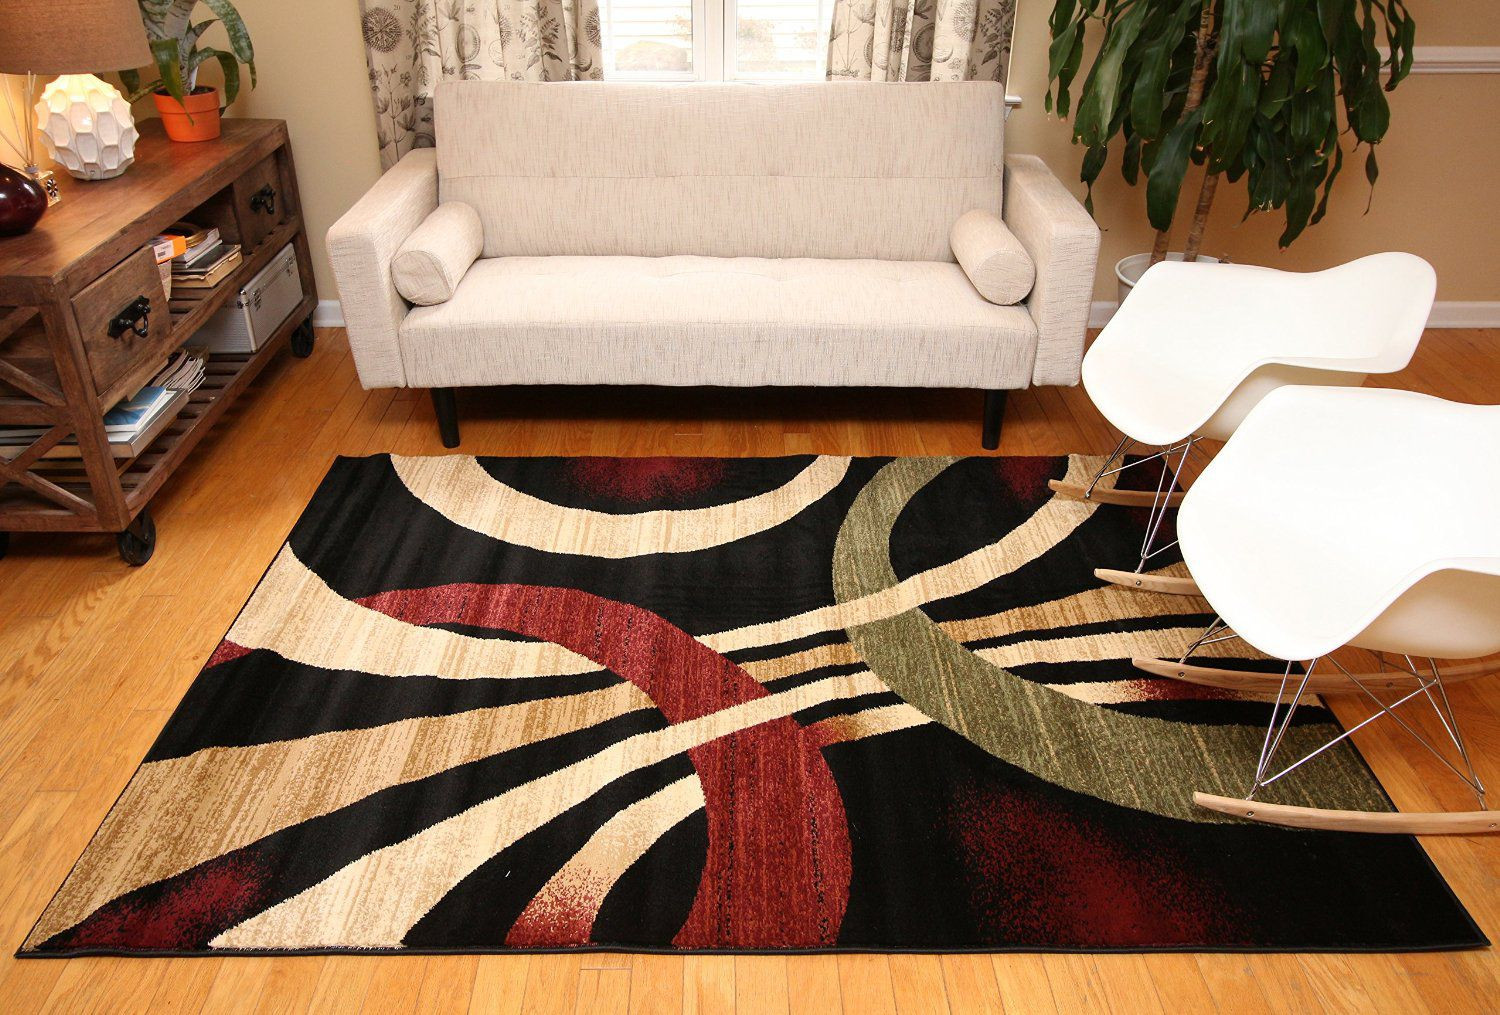 26 Perfect Living Room Rug On Hardwood Floor 2024 free download living room rug on hardwood floor of how to use an area rug with new city rug 56a33e035f9b58b7d0d11314